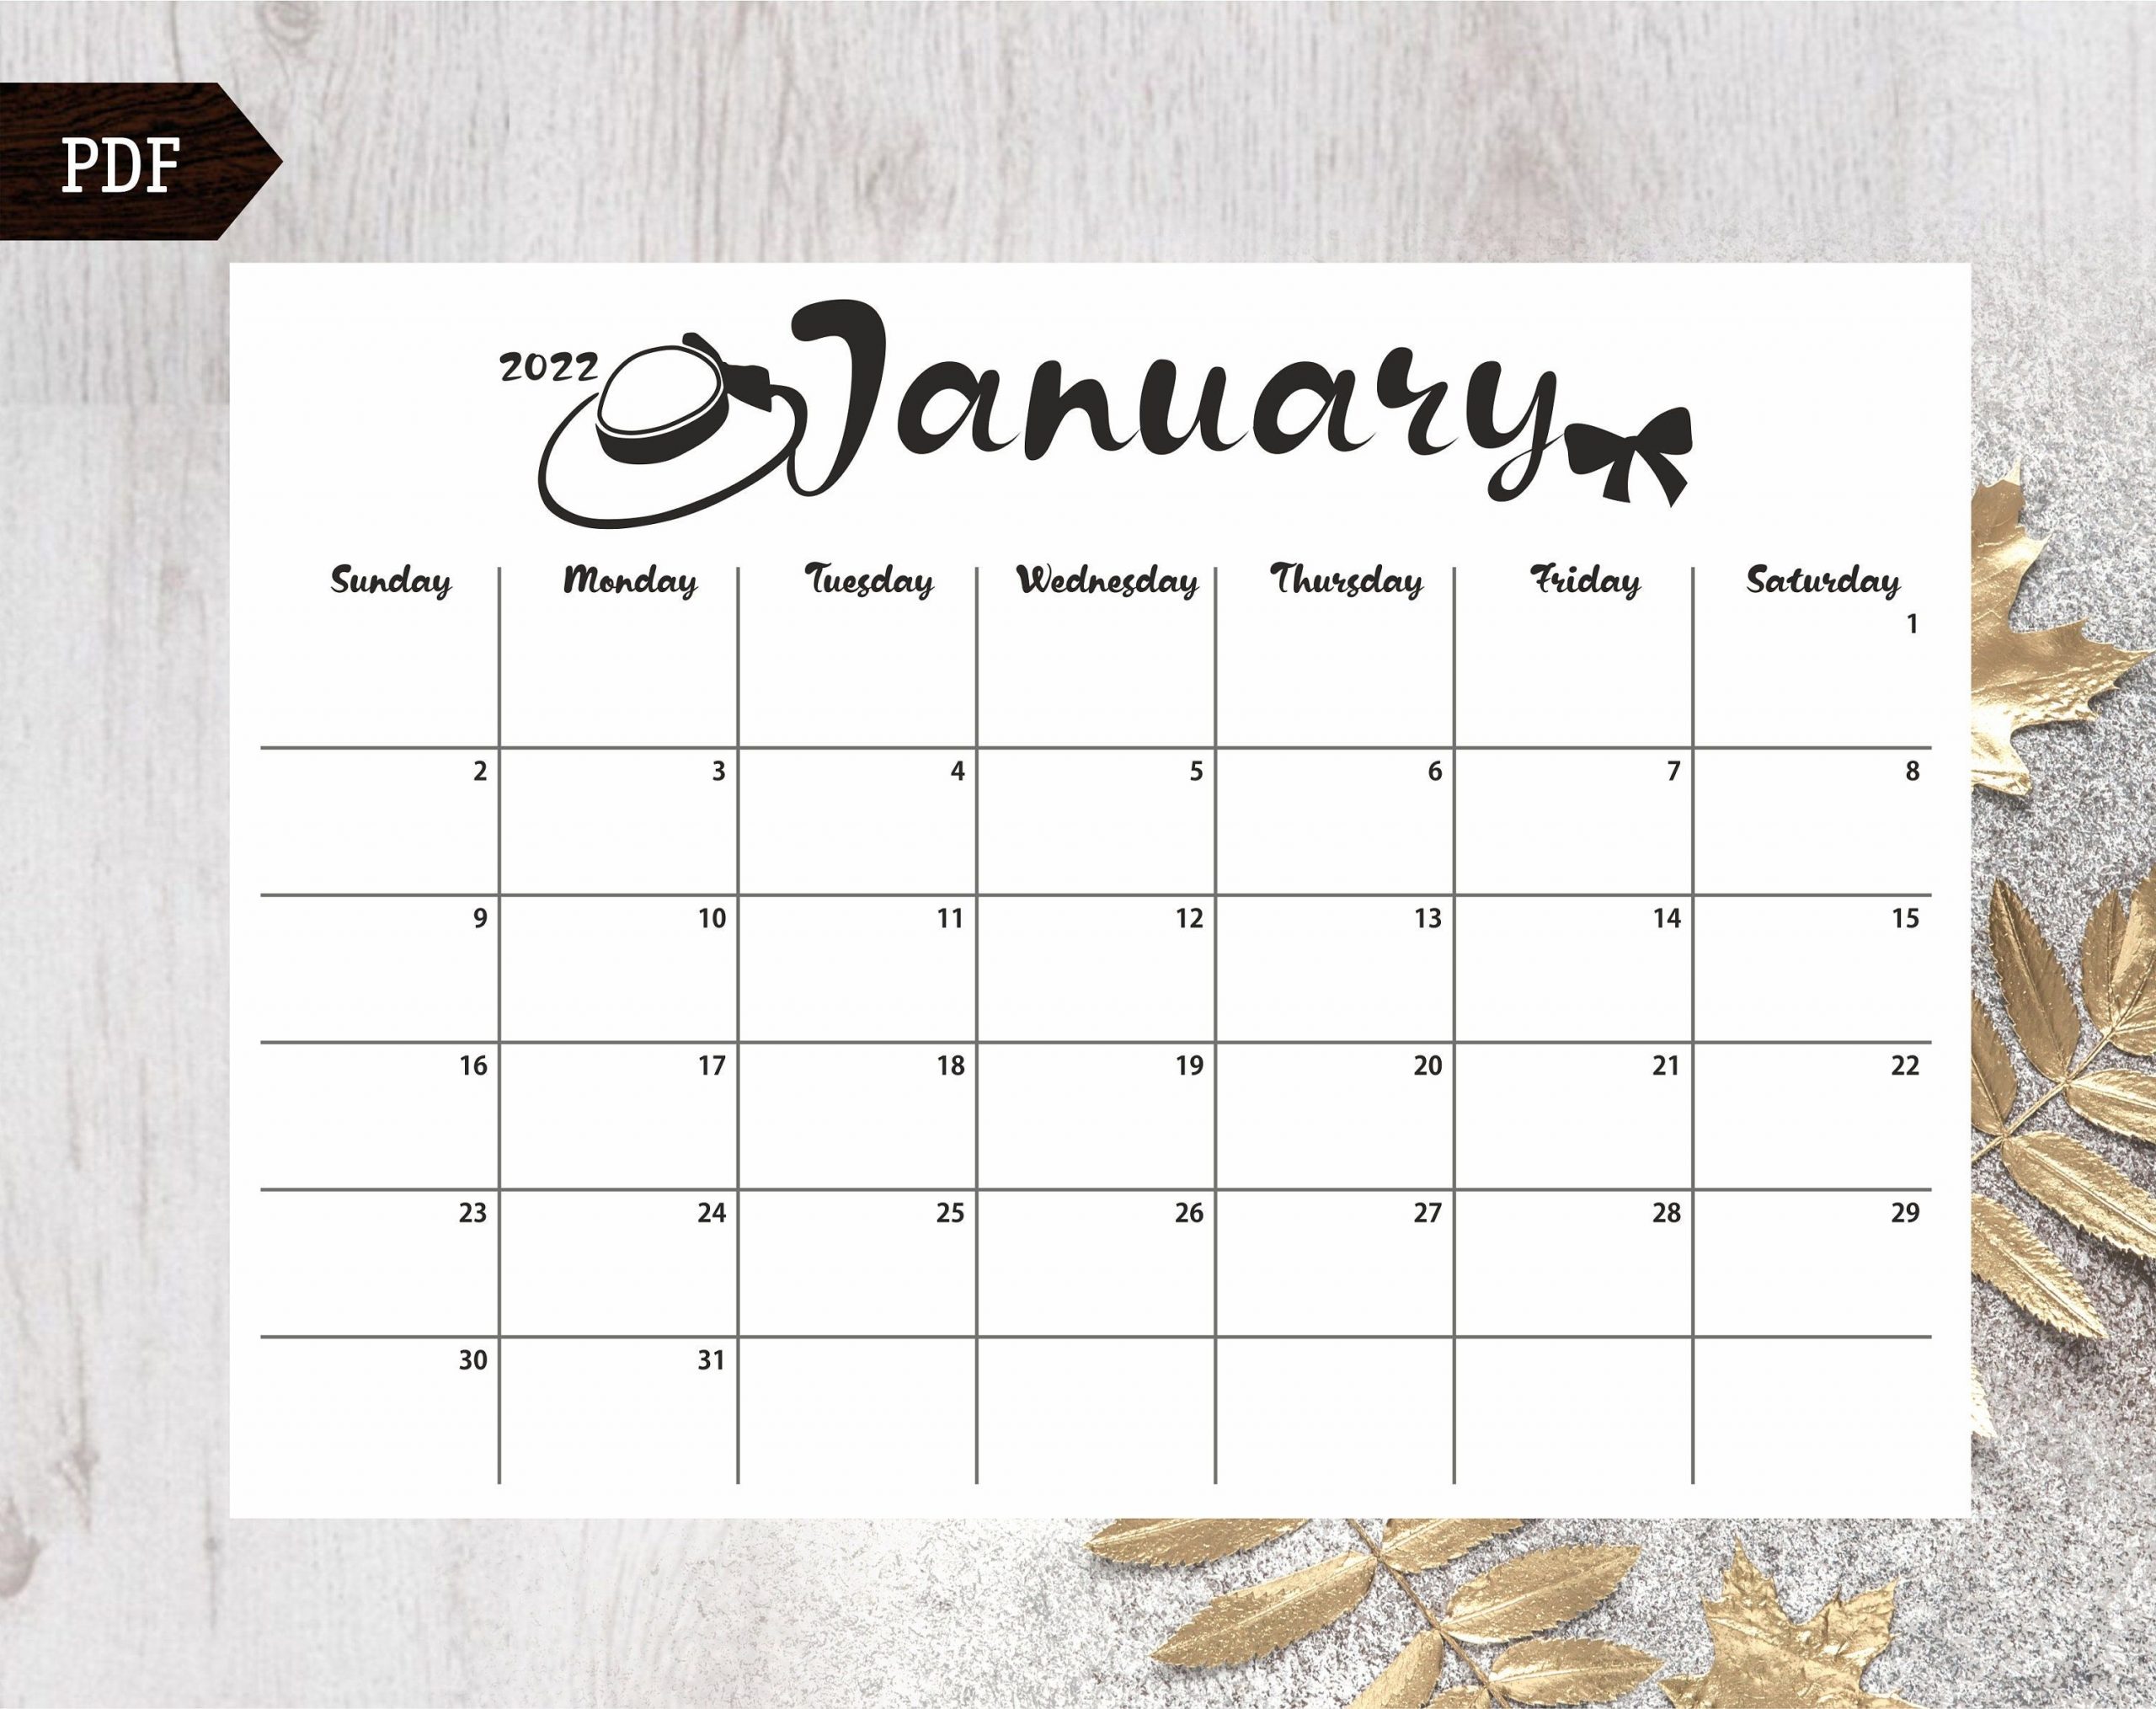 2022 White Calendar Wall Calendar Yearly Pdf Wall Calendar